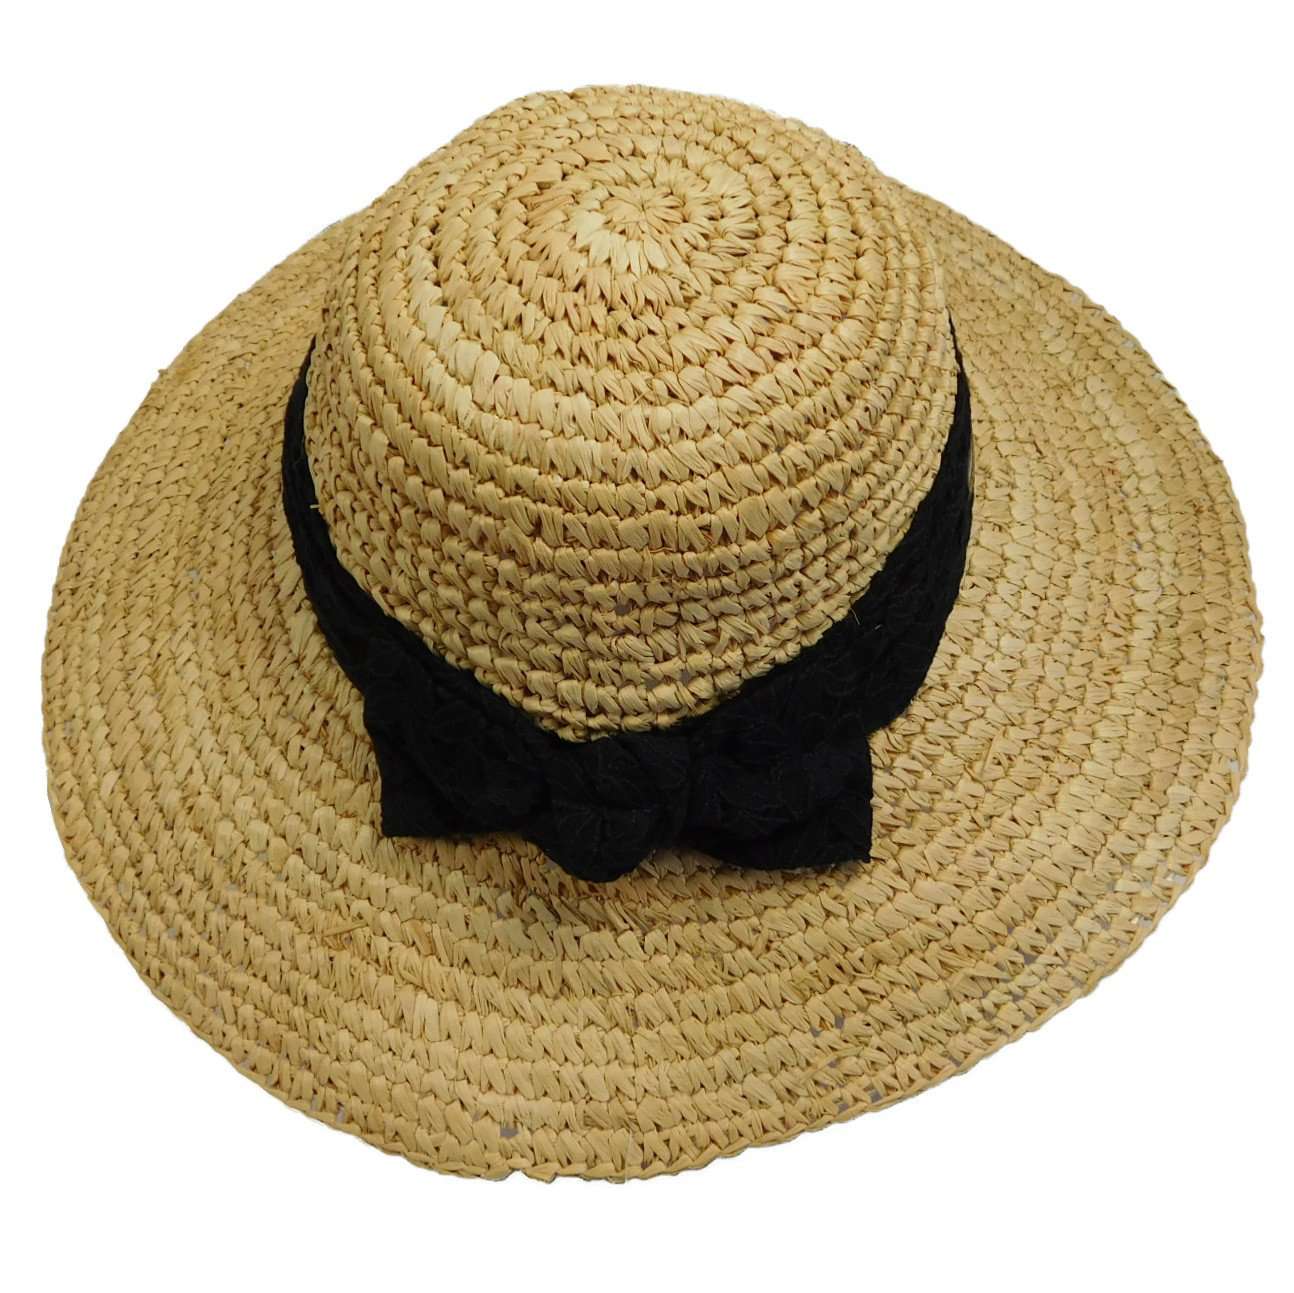 Crochet Raffia Sun Hat with Lace Scarf Wide Brim Hat Cappelli Straworld WSRA497BK Black  